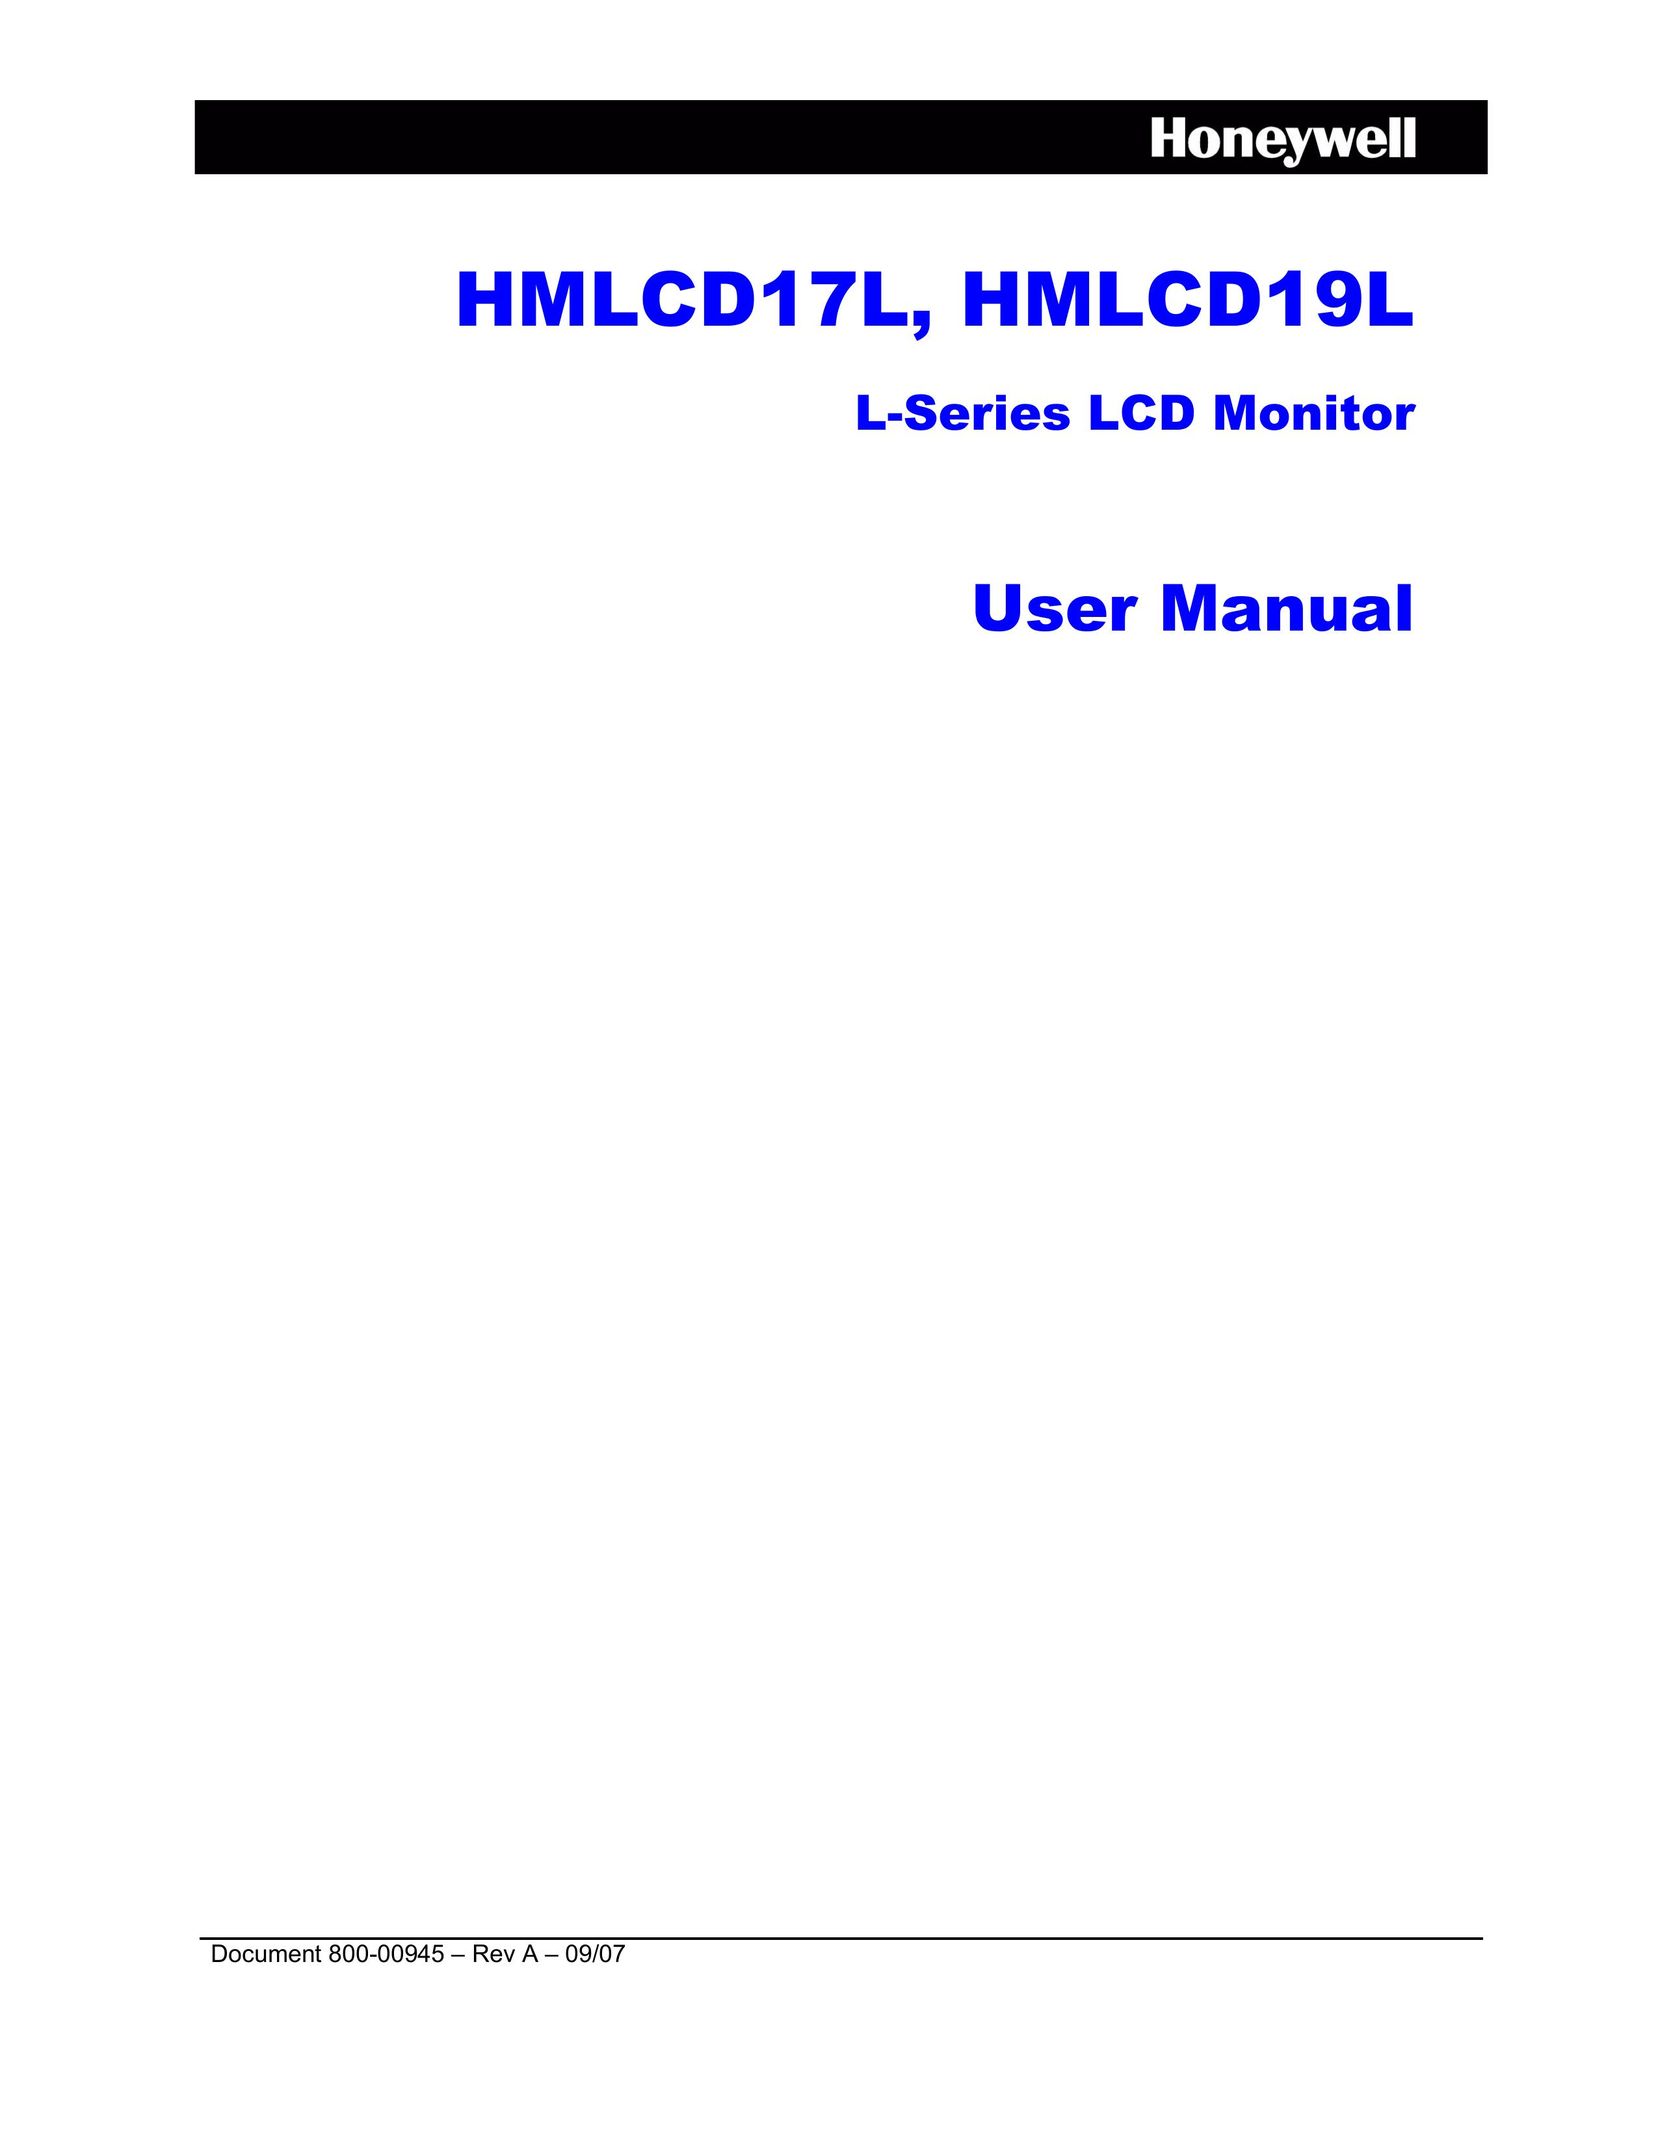 Honeywell HMLCD19L Computer Monitor User Manual